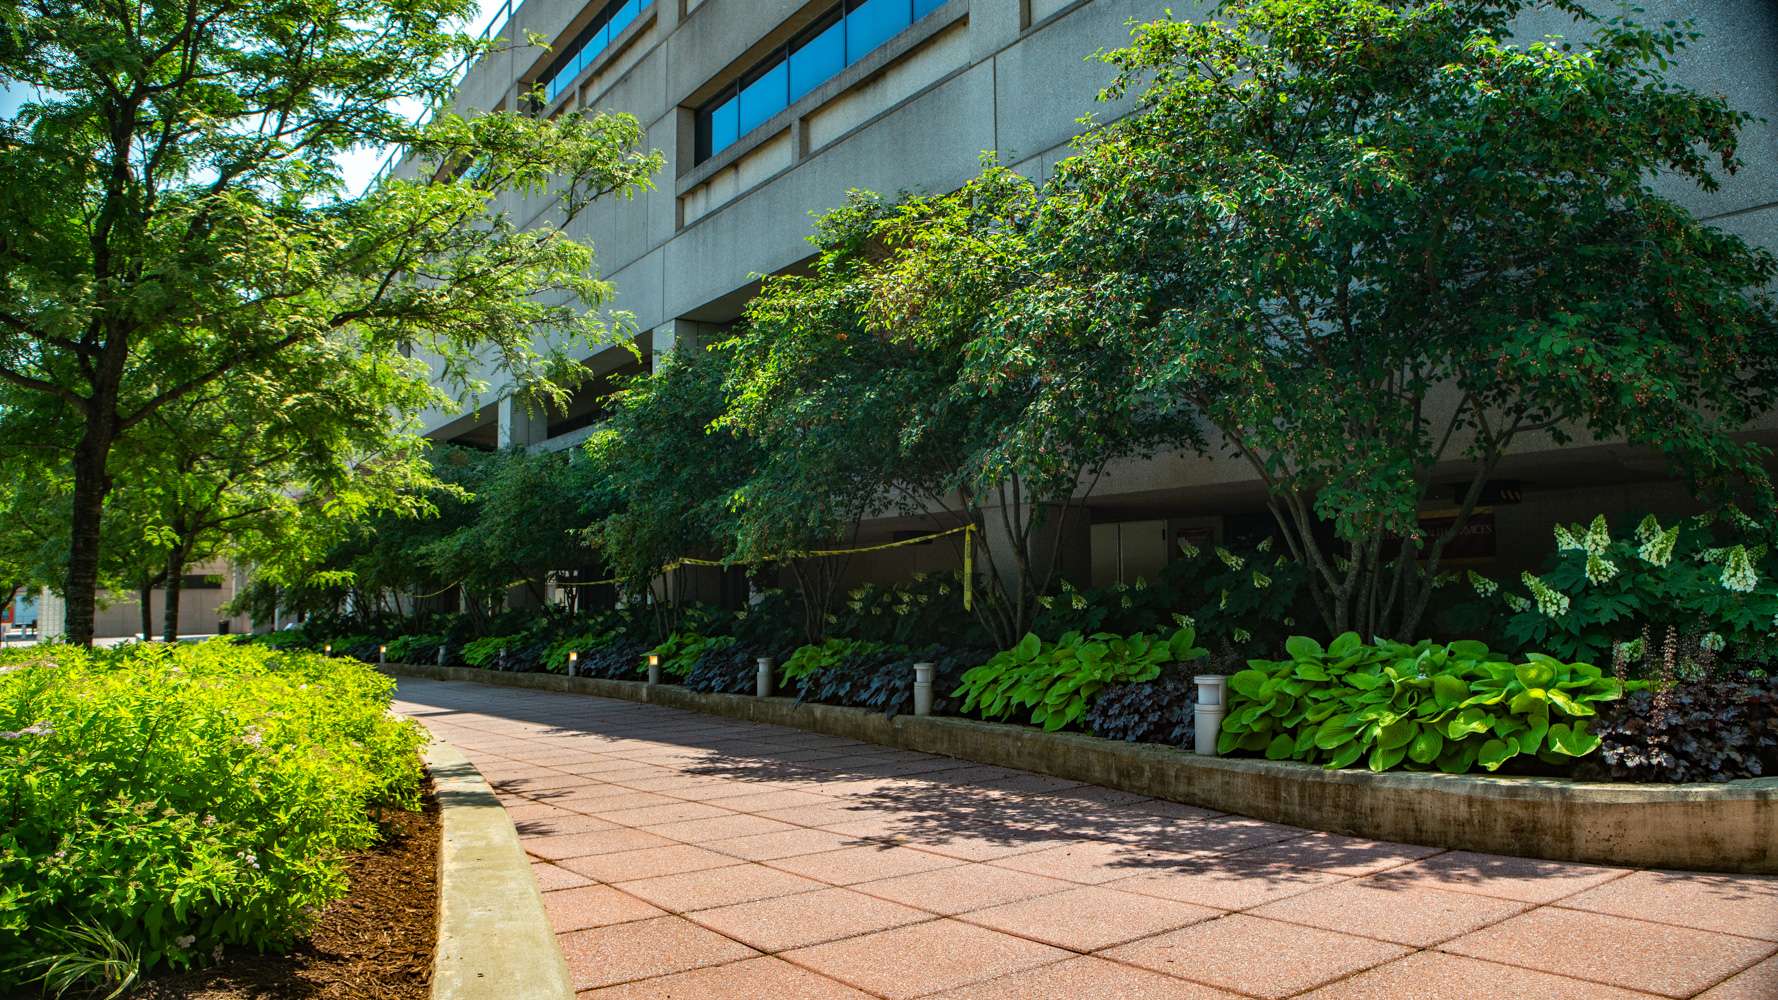 Commercial landscaping Howard University Hospital pavers seating trees, shrubs, lighting 